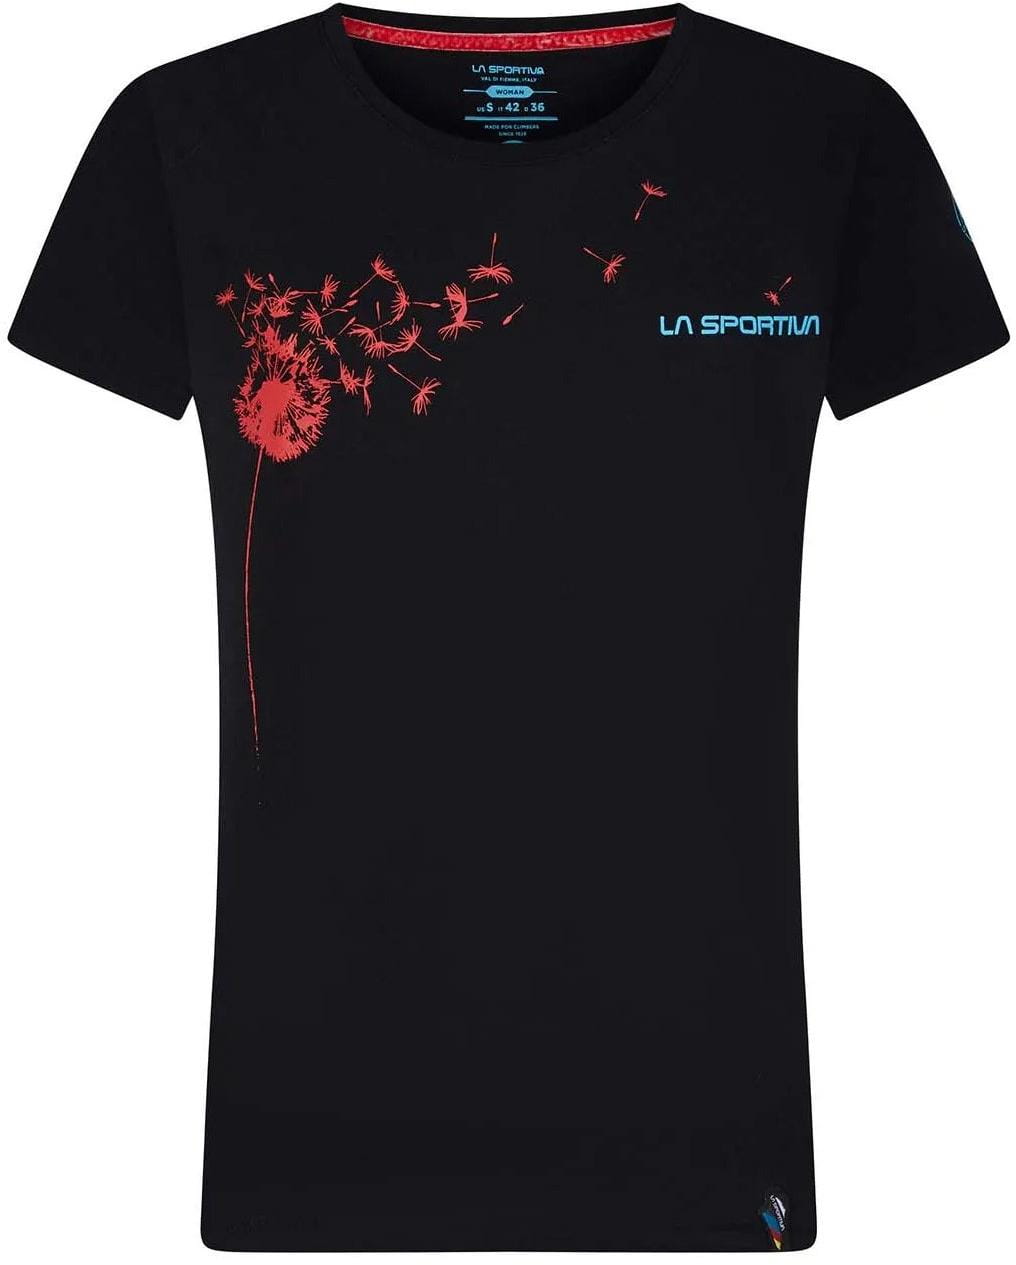 Kletterhemd für Frauen La Sportiva Windy T-Shirt W